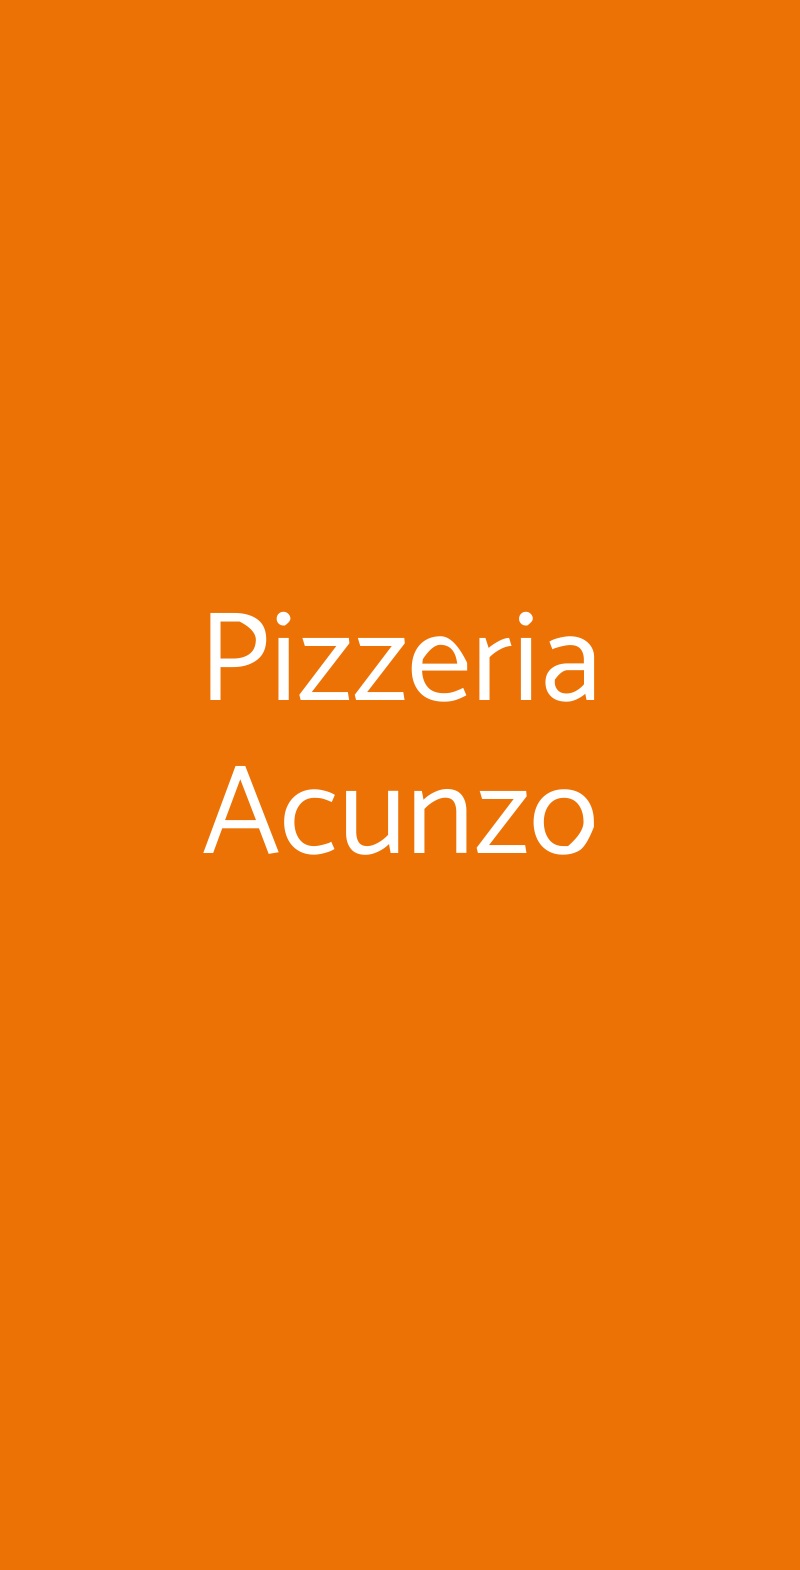 Pizzeria Acunzo Napoli menù 1 pagina